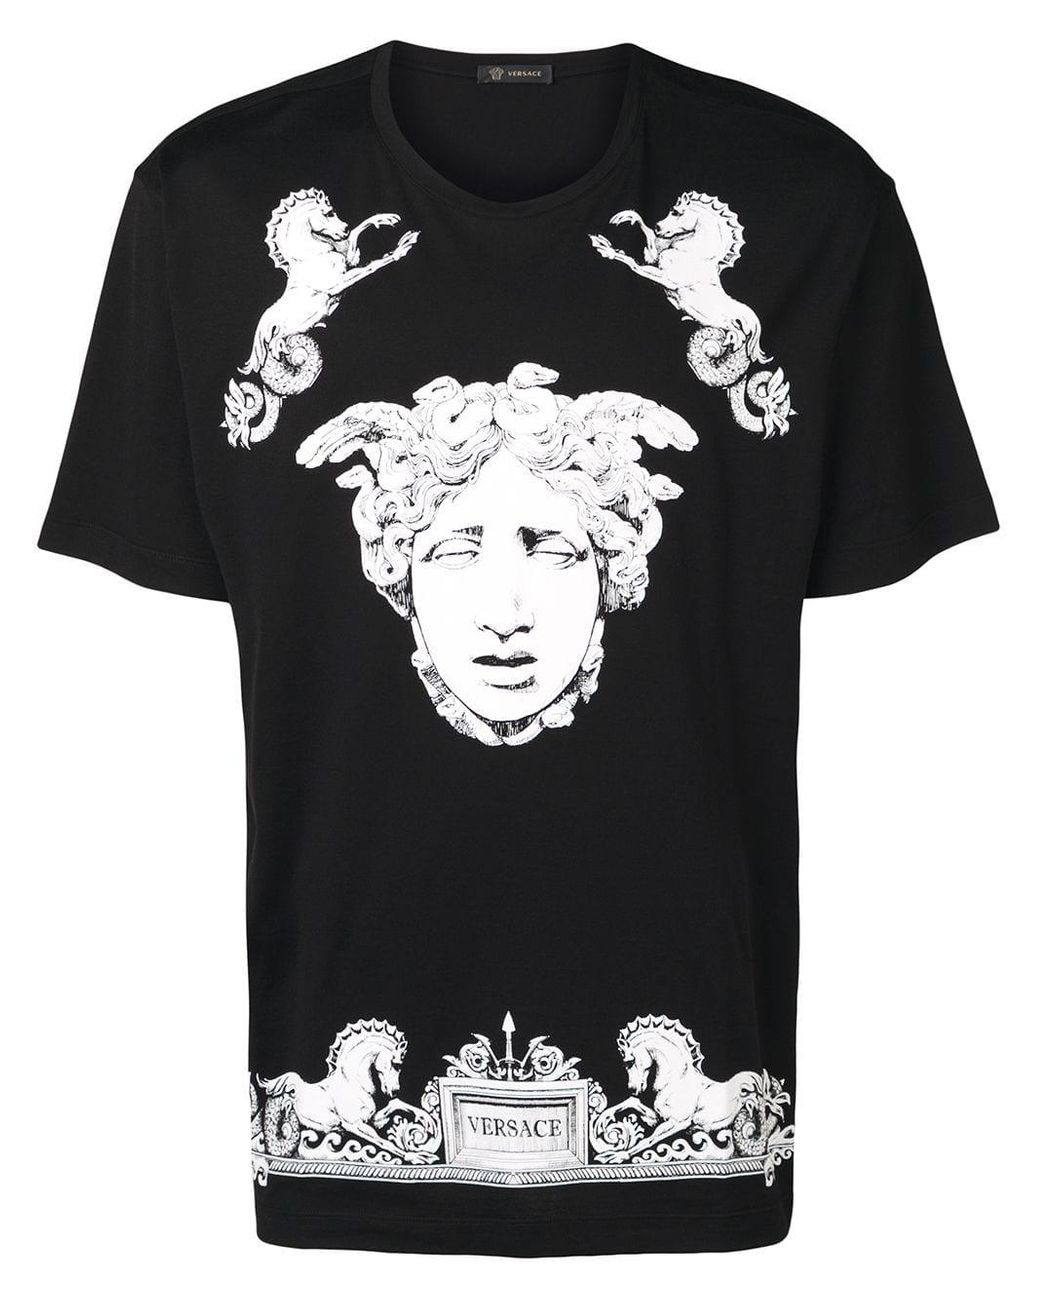 Versace Cotton Medusa T-shirt in Black for Men - Lyst